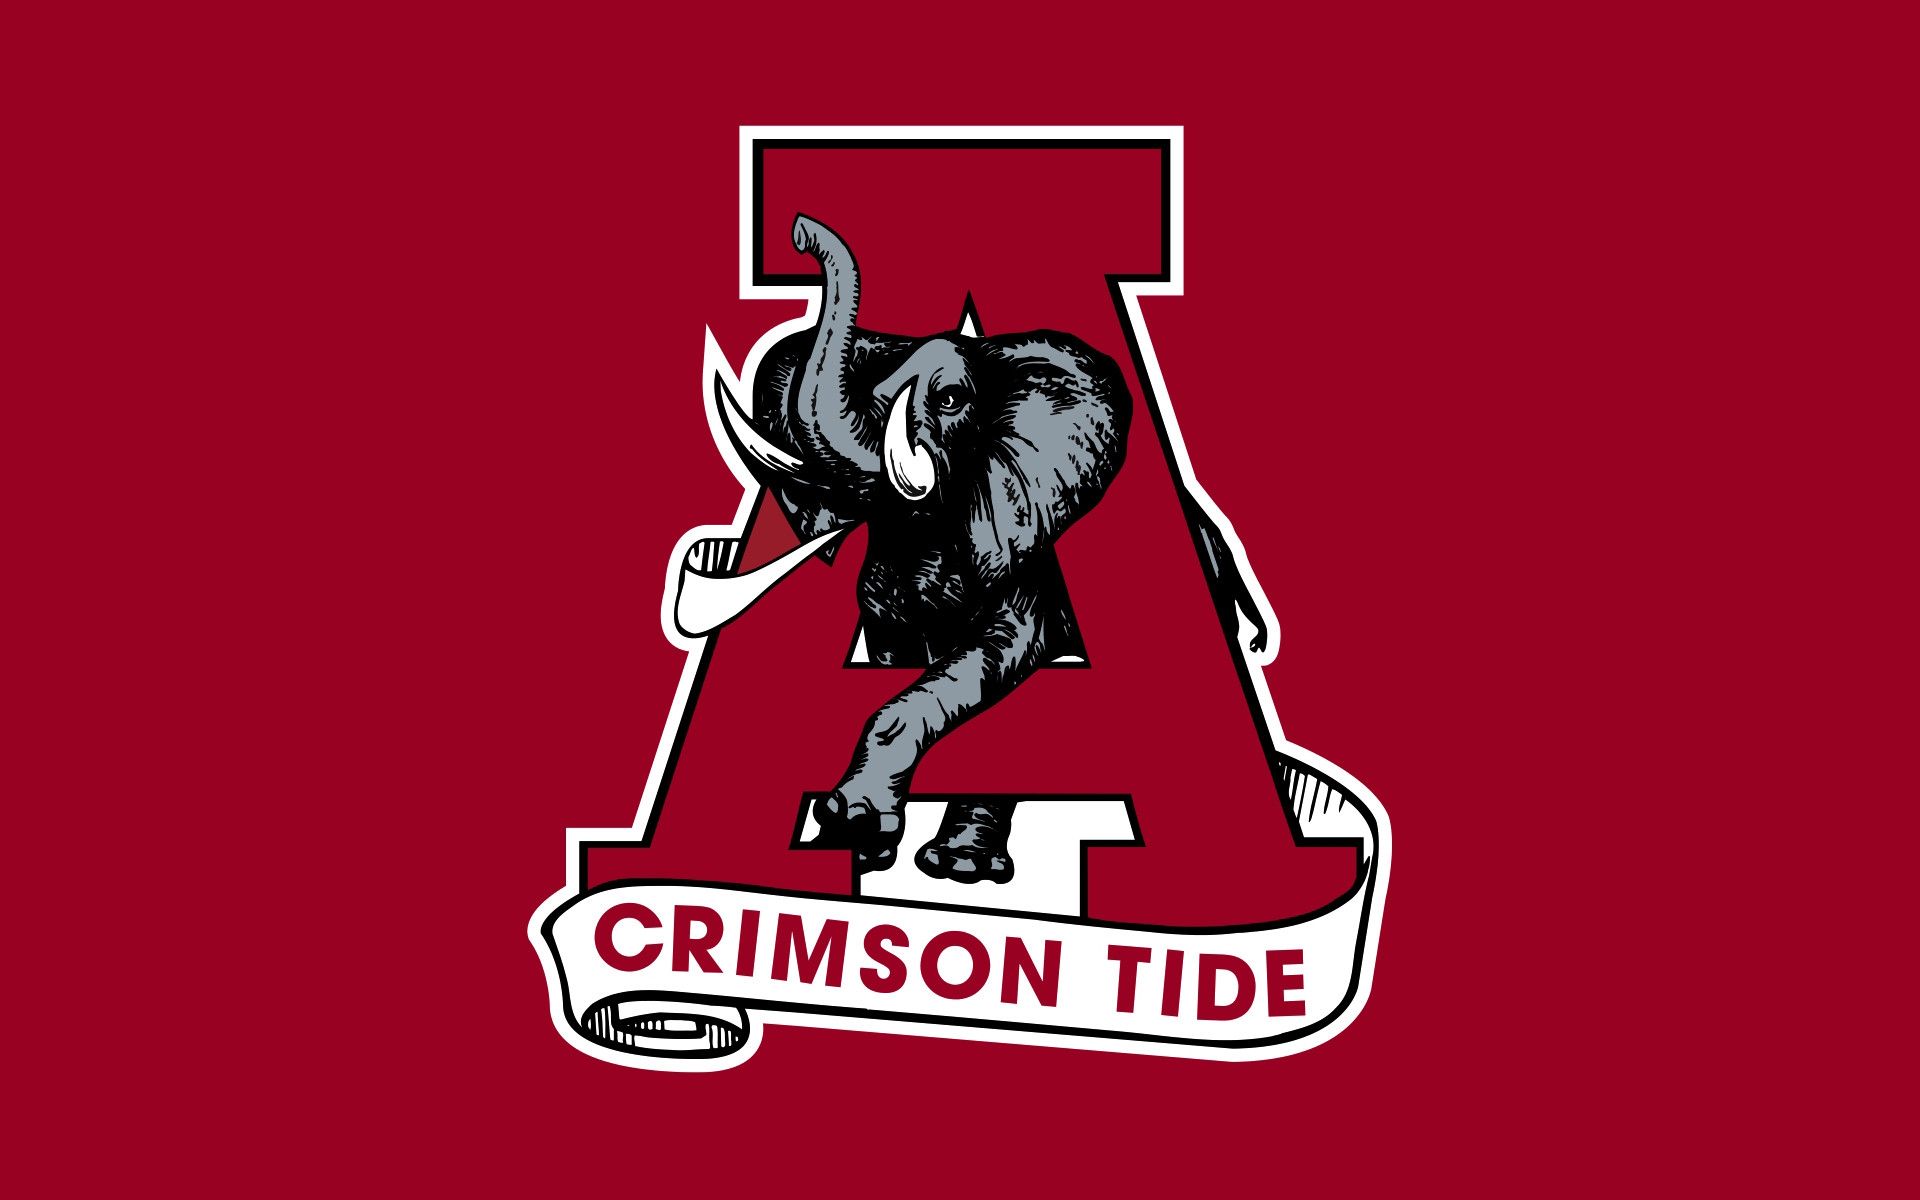 Alabama Crimson Tide Desktop Wallpaper Sf